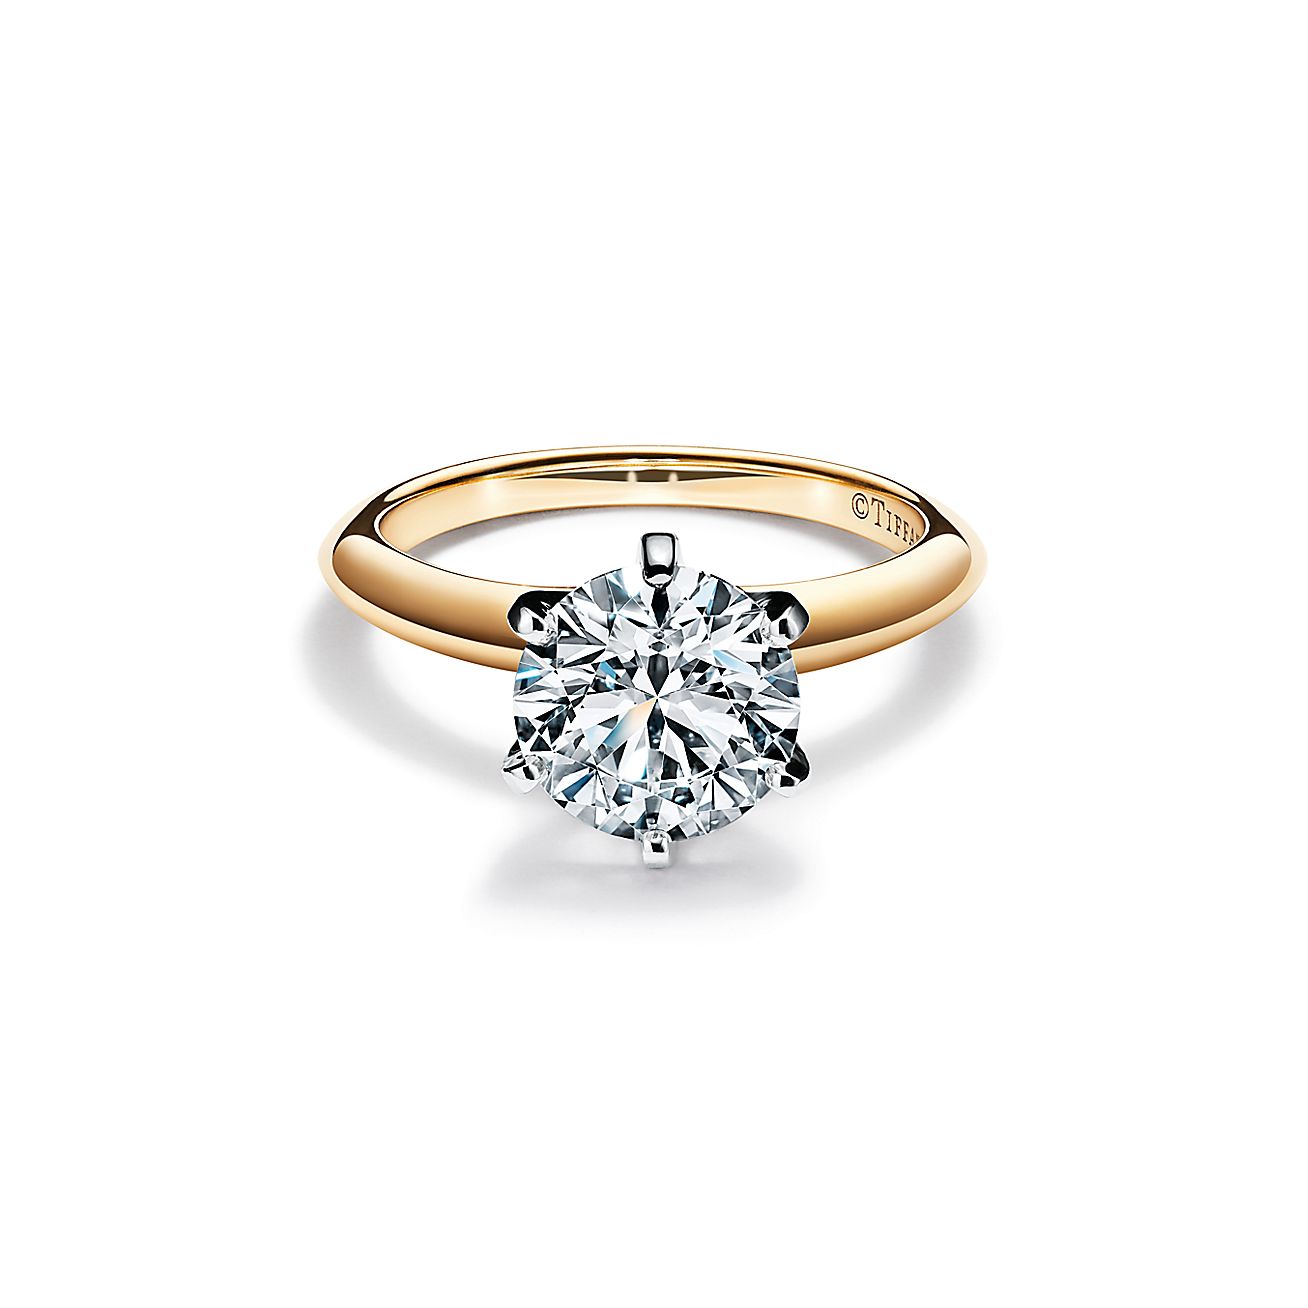 El anillo de compromiso Tiffany® Setting amarillo de 18 quilates